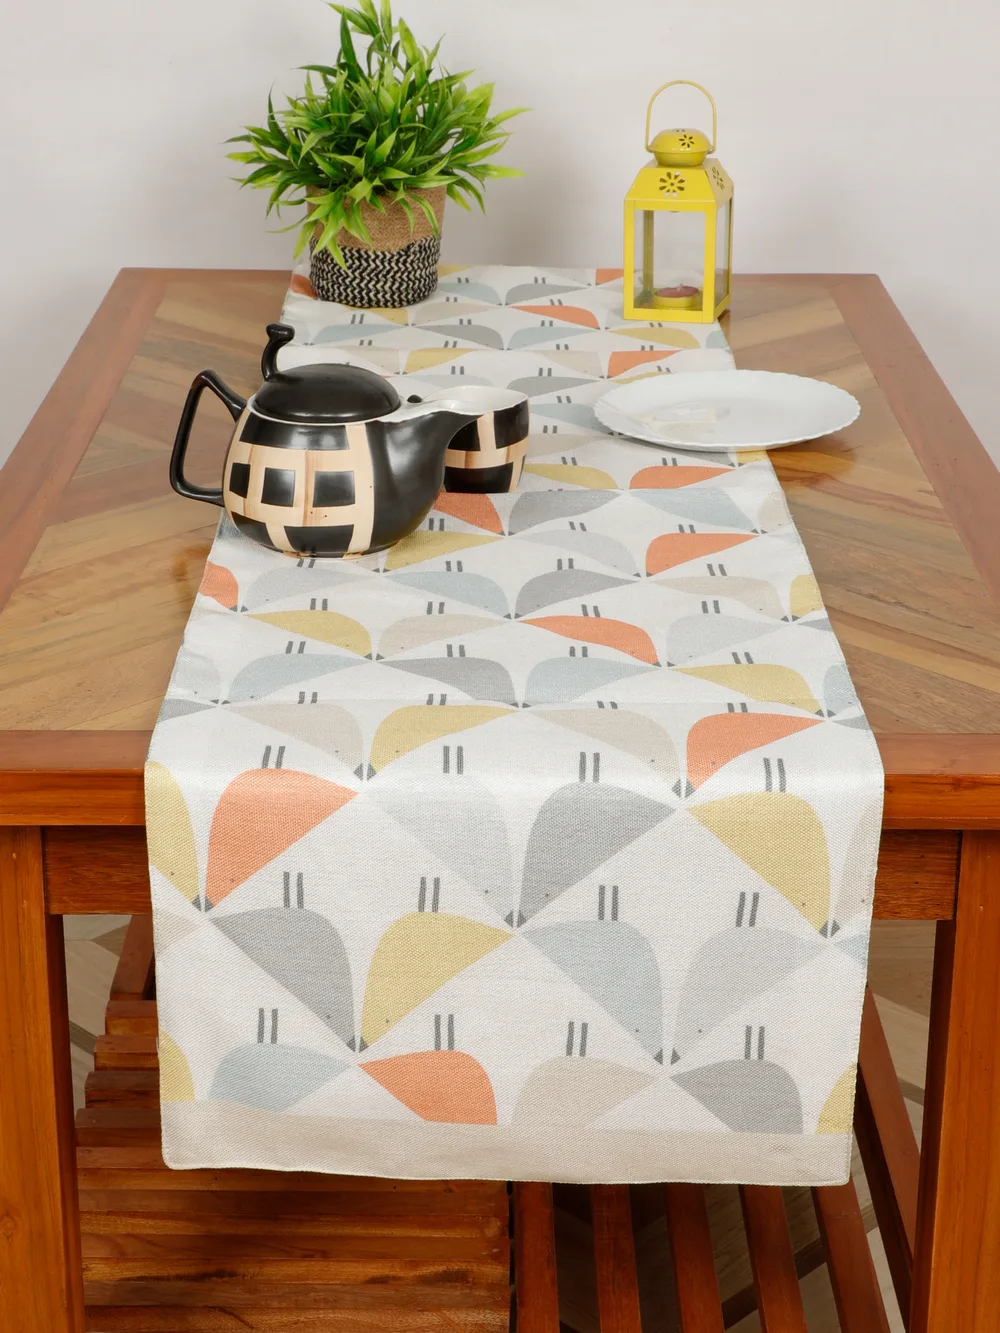 Cotton polyester printed table runner, birds, 54x14, white, yellow, orange